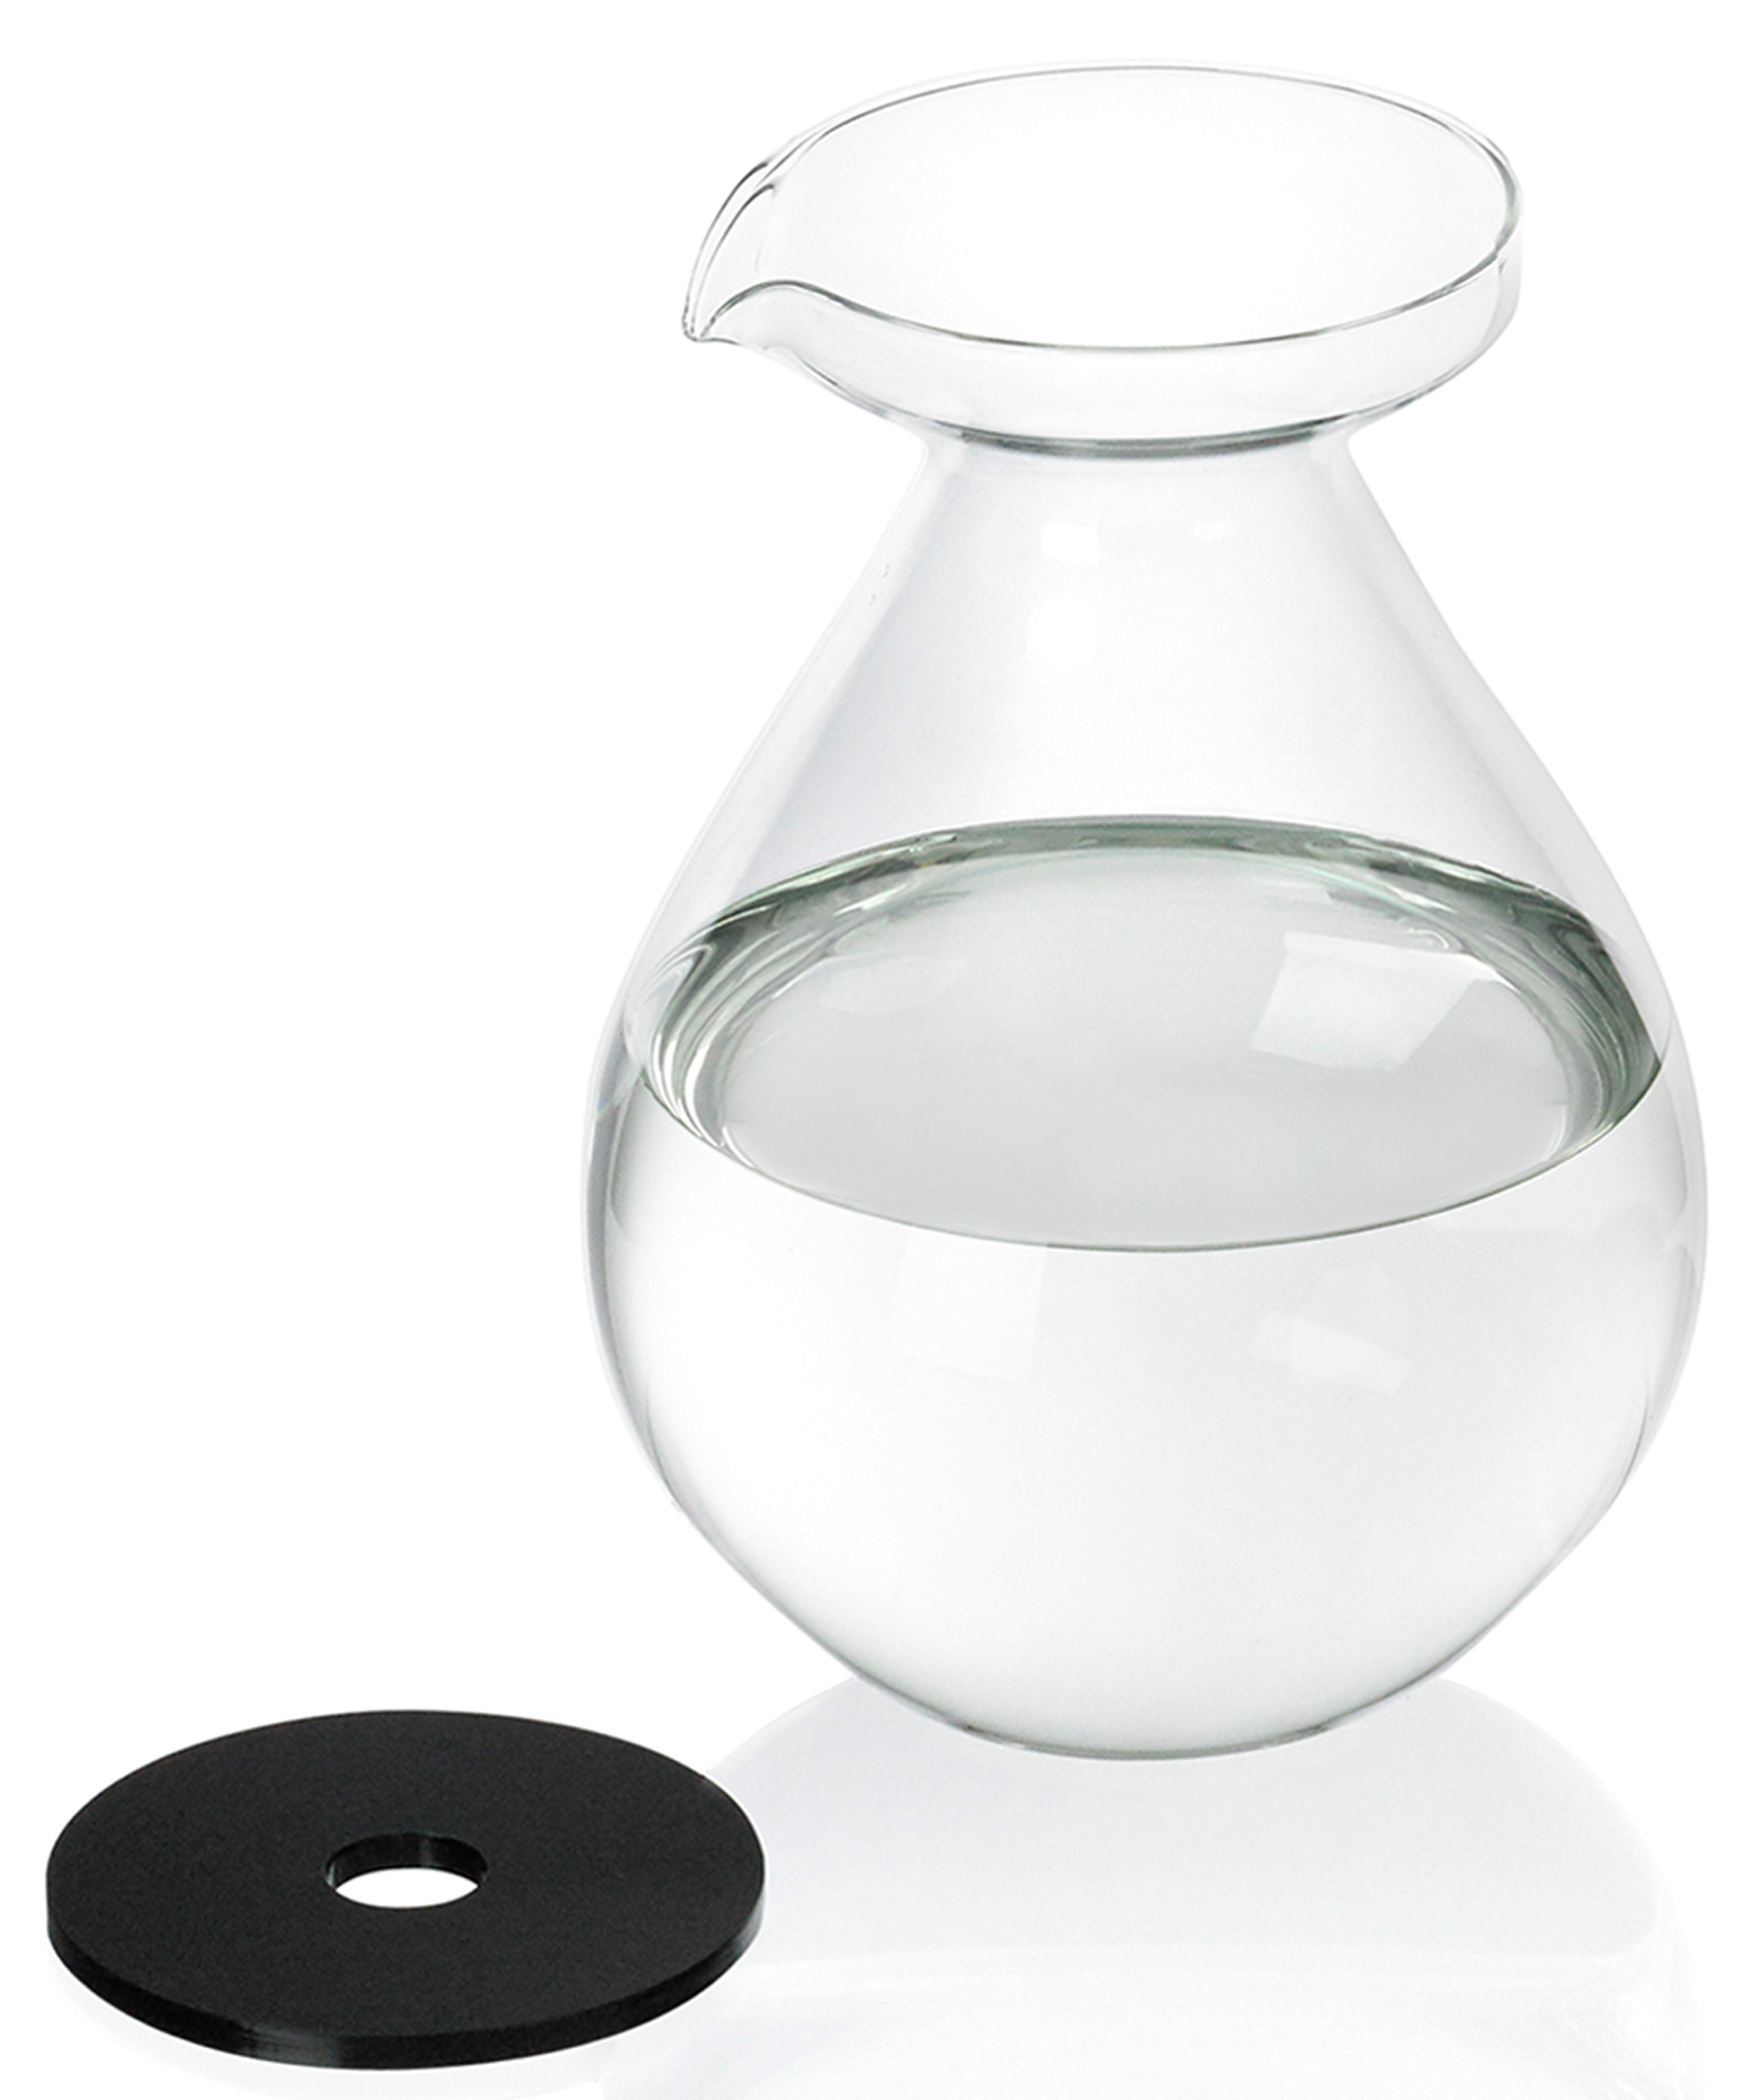 Sebastian Bergne designs jug shaped like enormous water droplet